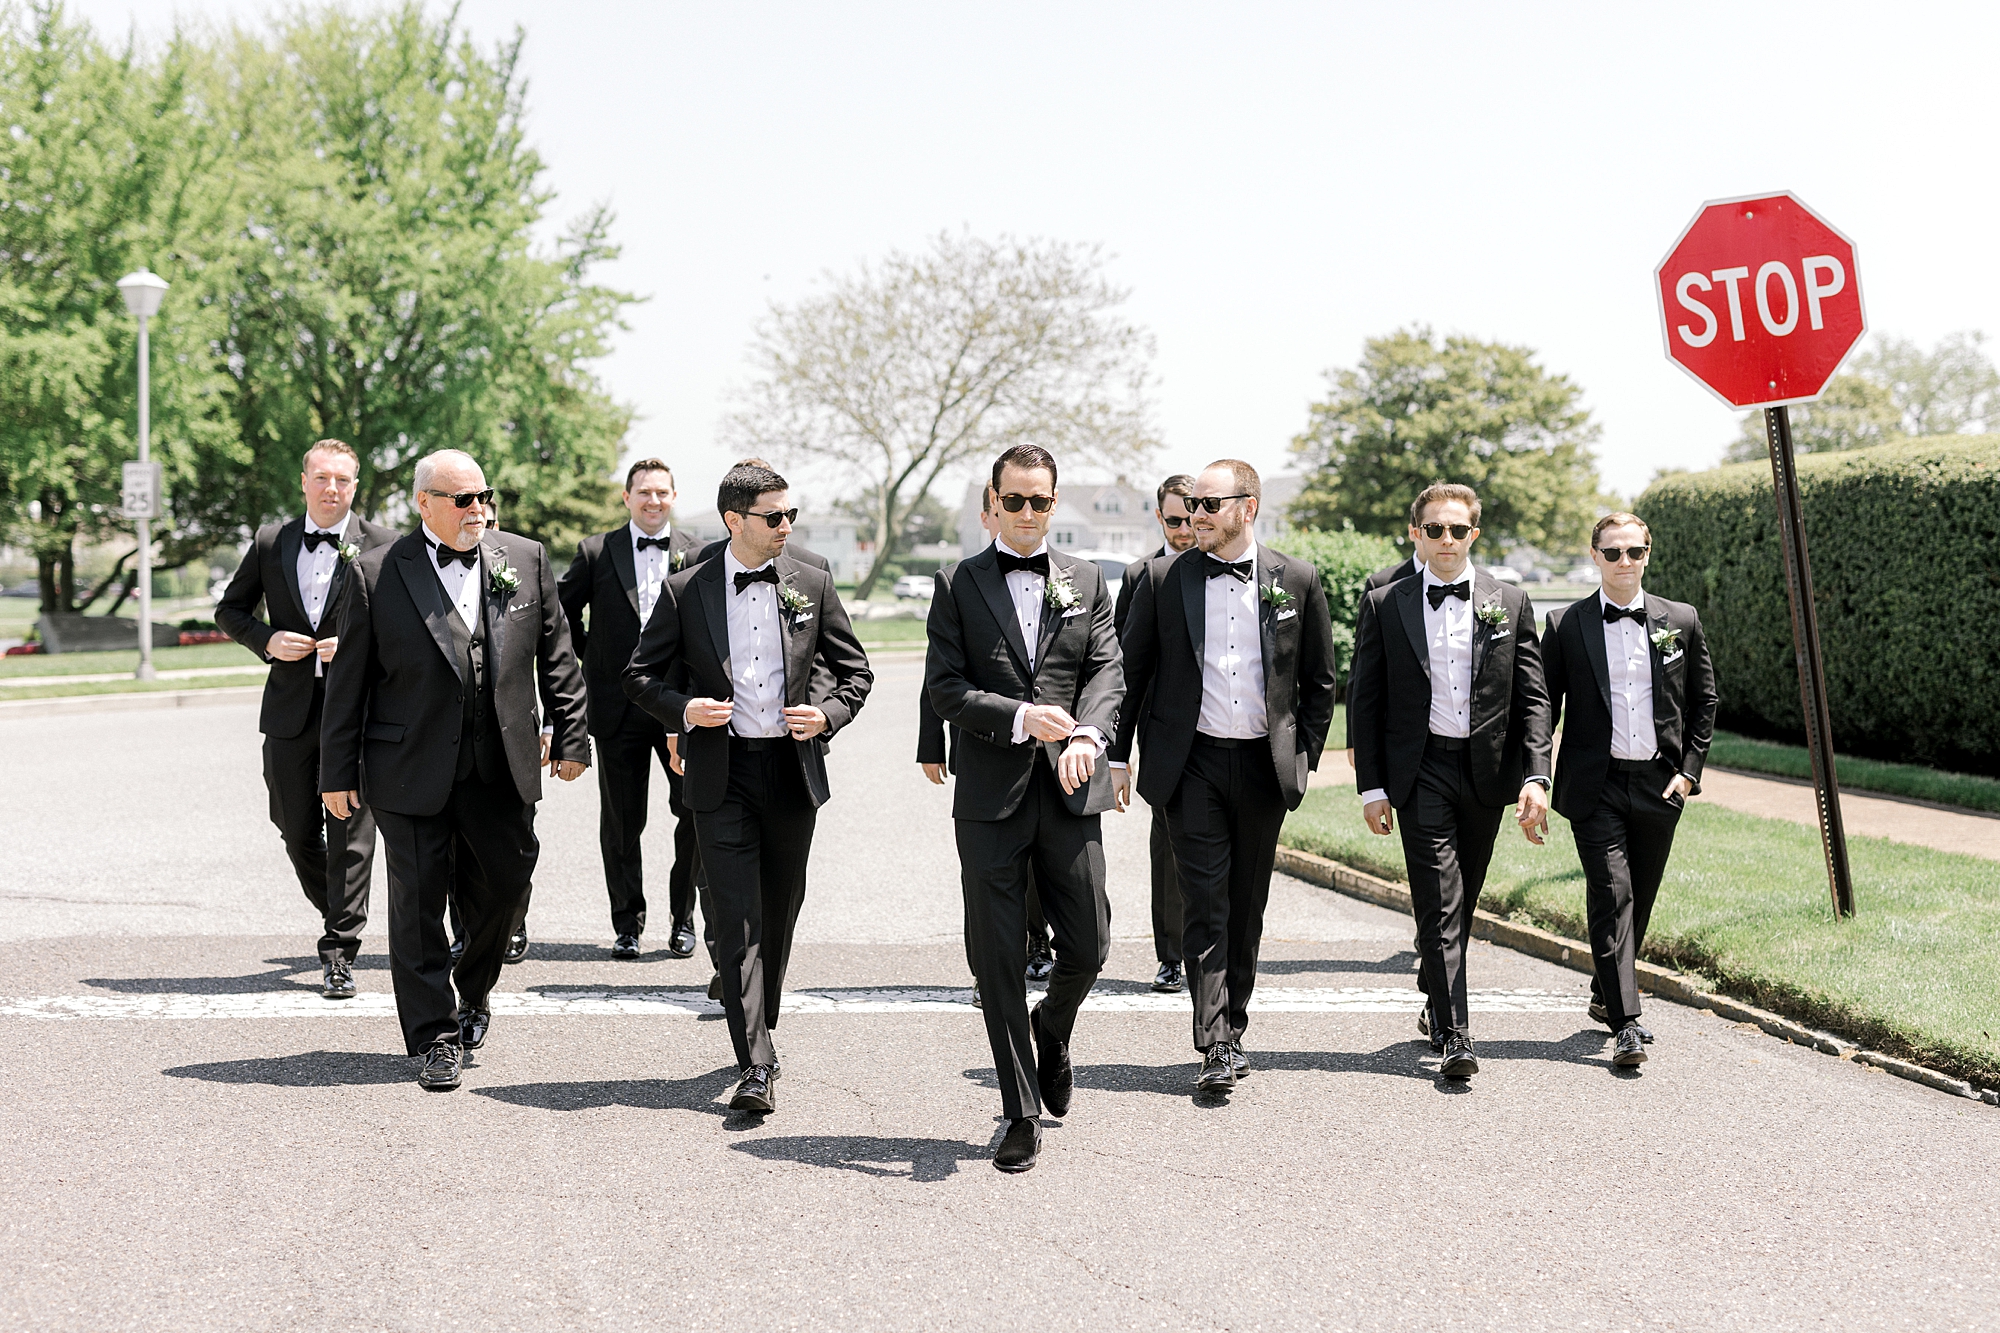 groom and groomsmen in black suits and sunglasses walk on street